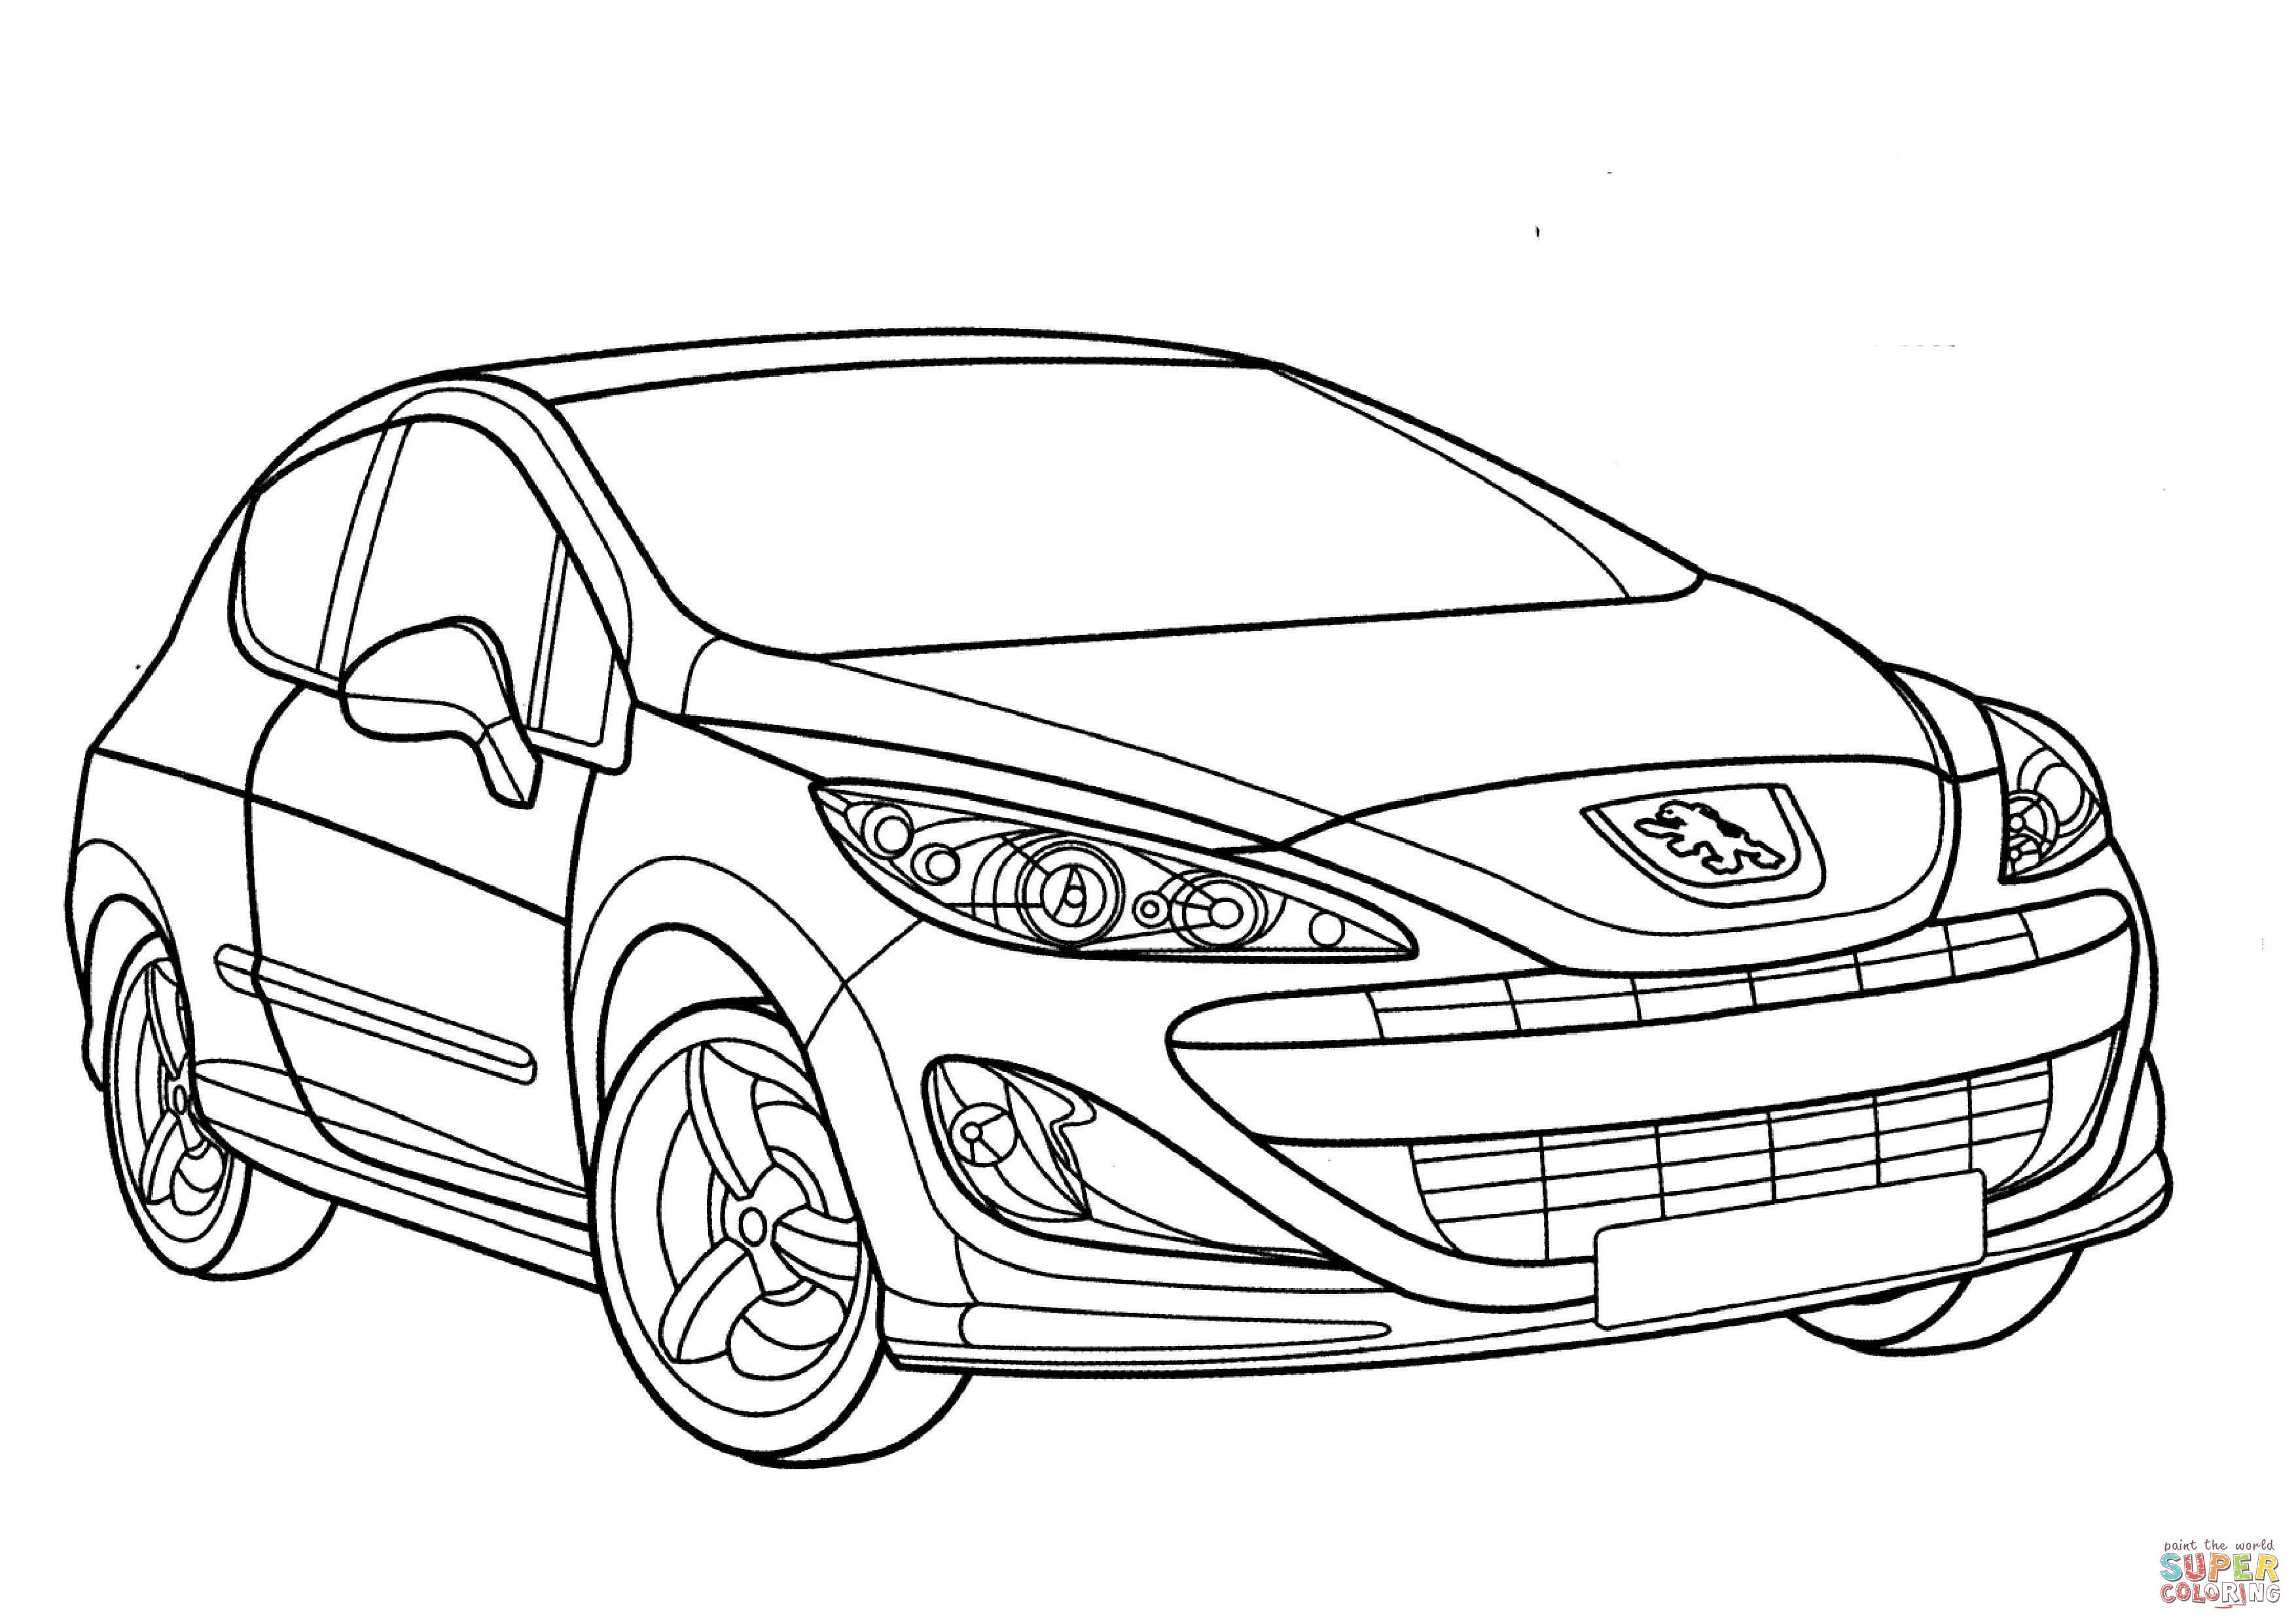 Peugeot Image Drawing